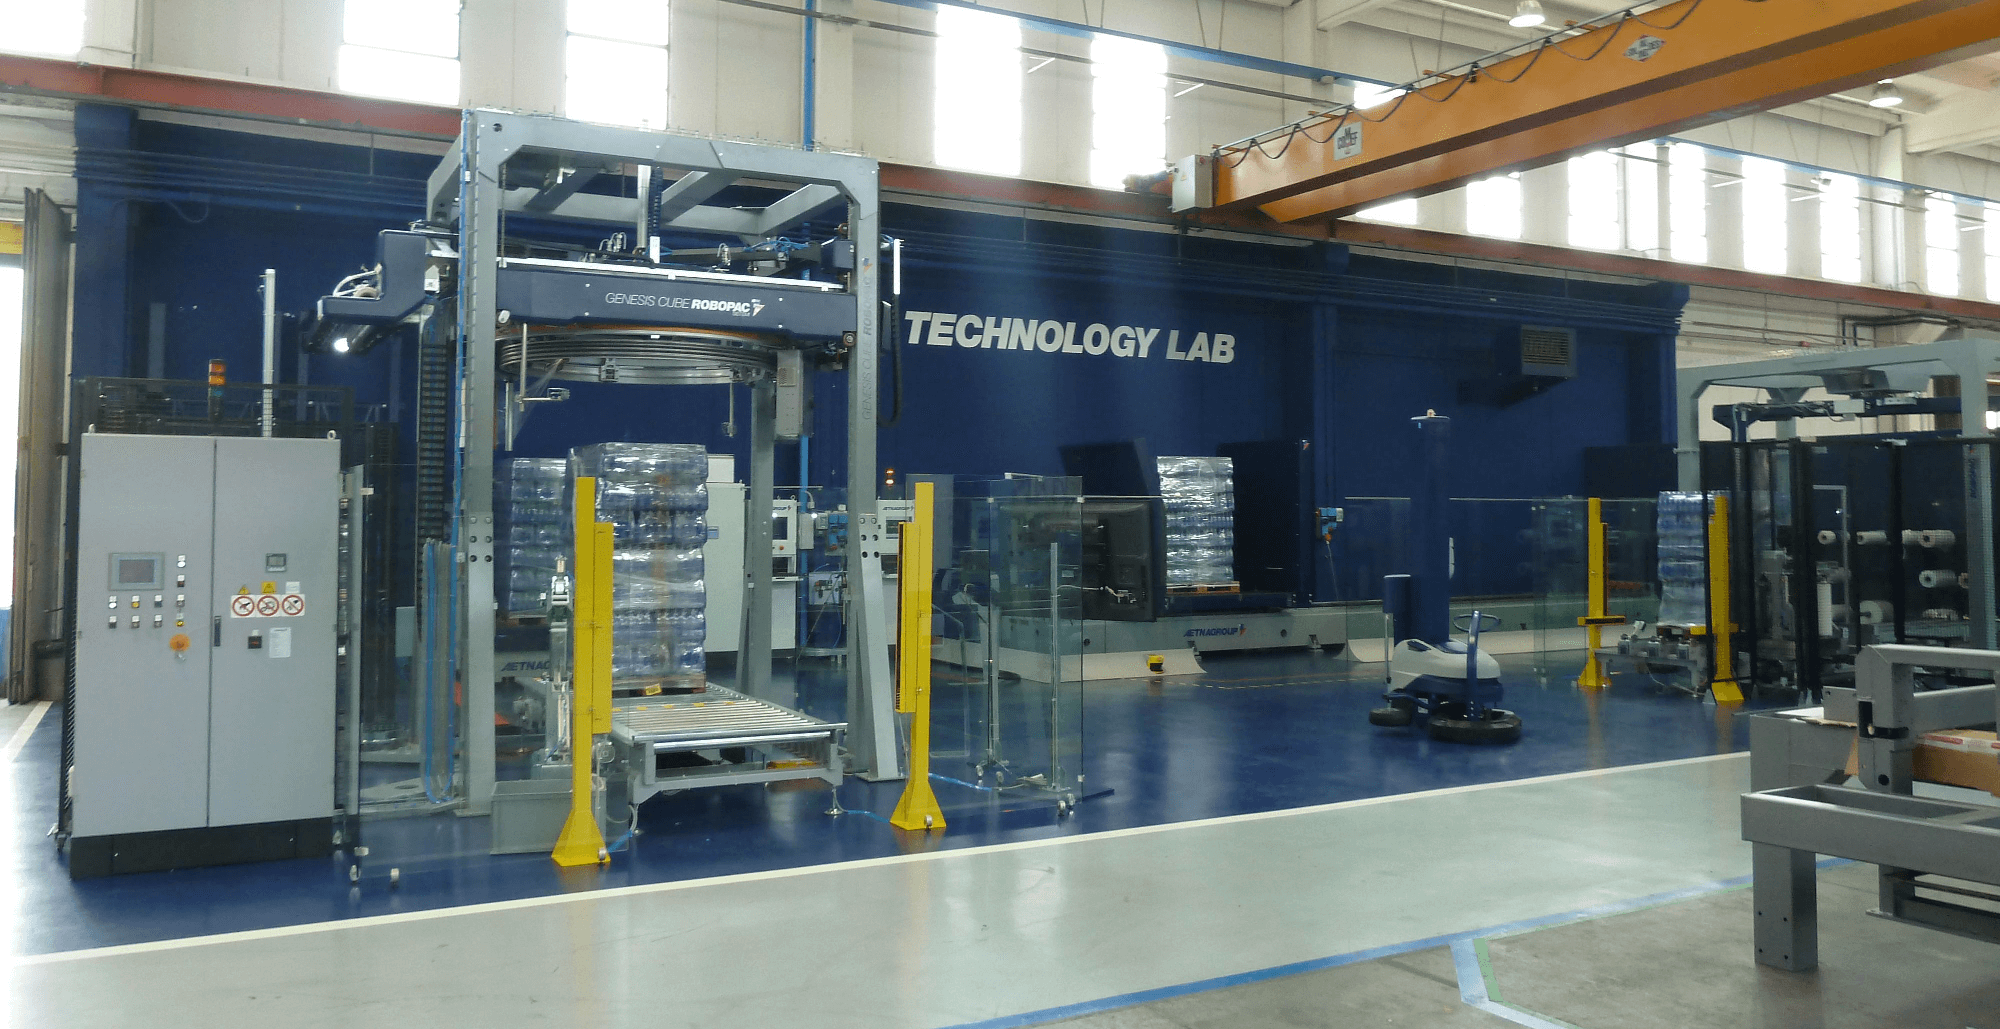 Technology lab